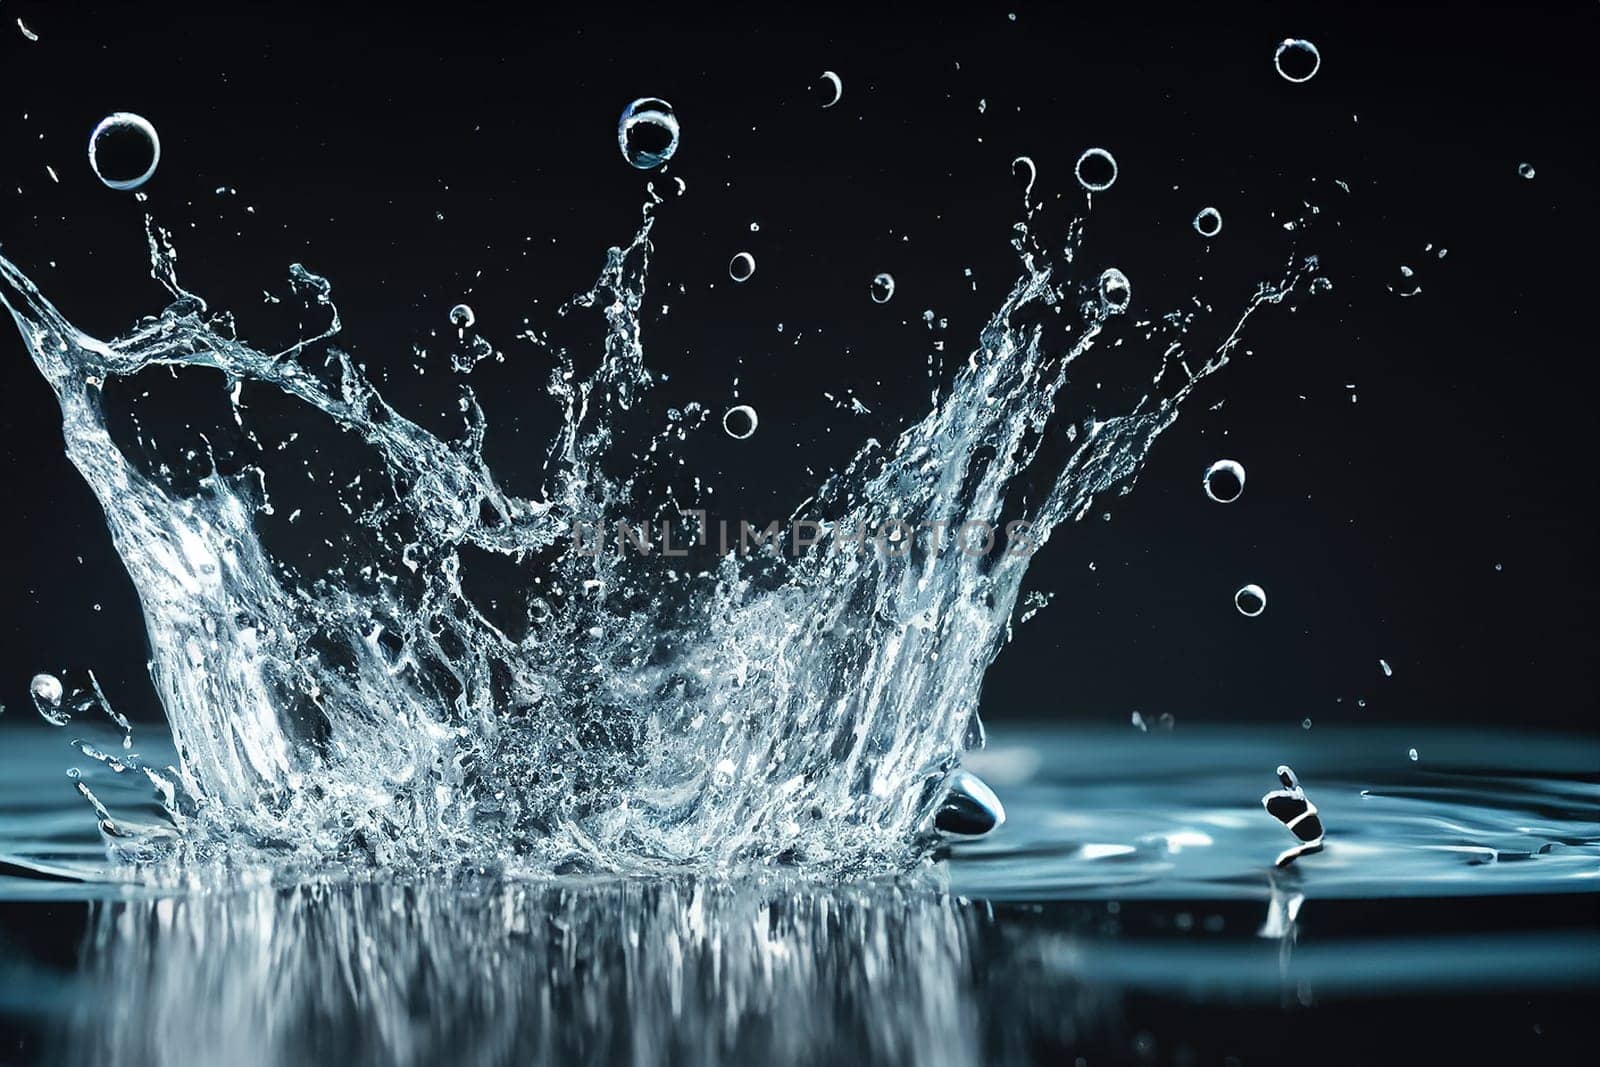 Water splash close-up macro photography. by yilmazsavaskandag